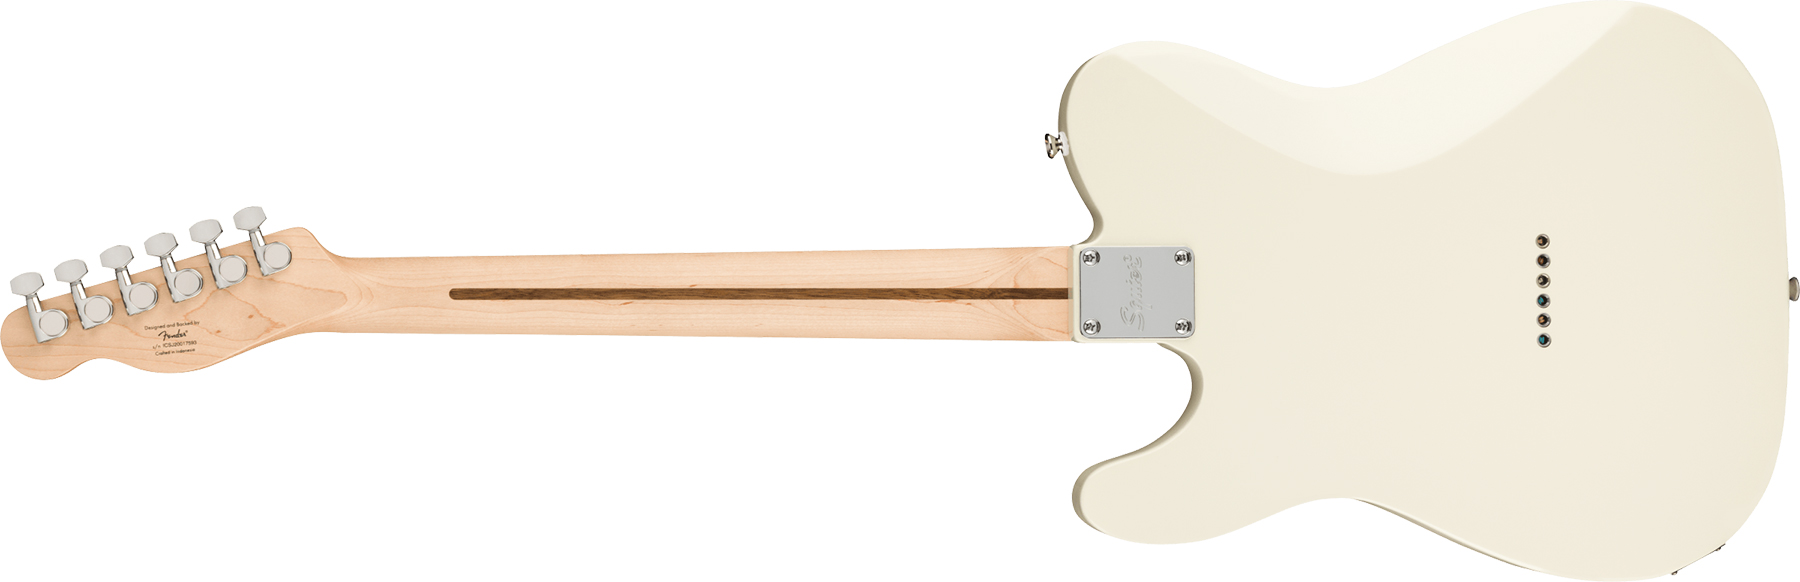 Squier Tele Affinity 2021 2s Lau - Olympic White - Guitarra eléctrica con forma de tel - Variation 1